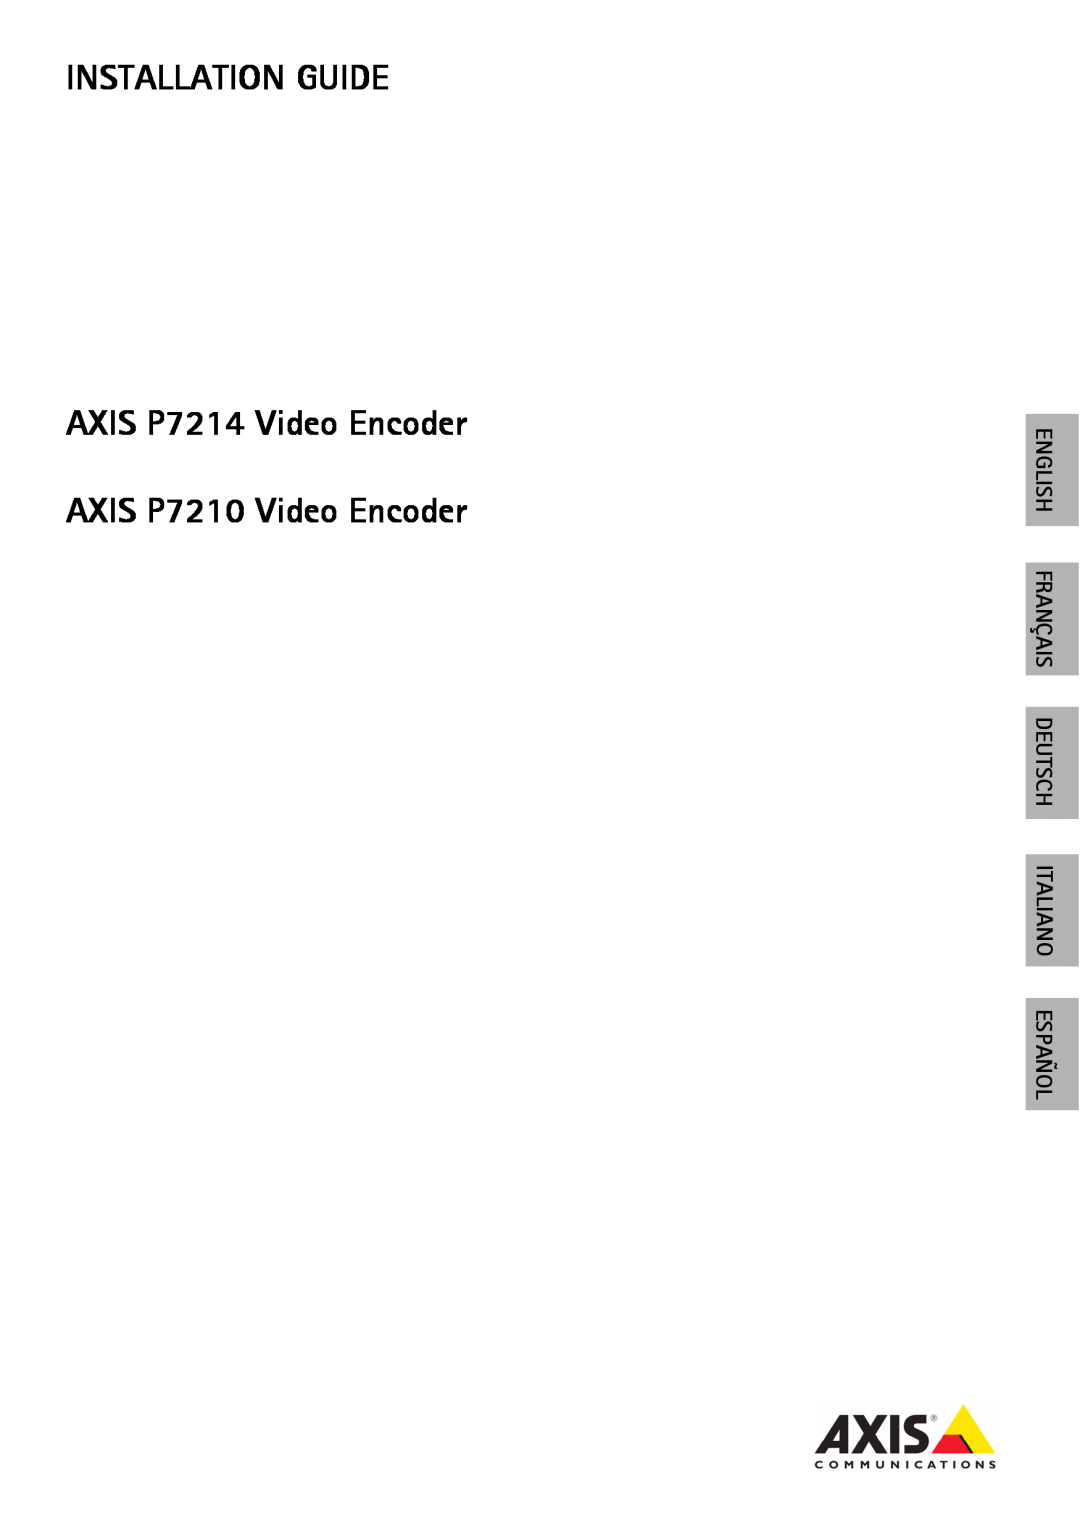 Axis Communications P7214/P7210 manual Installation Guide, English Français Deutsch Italiano Español 